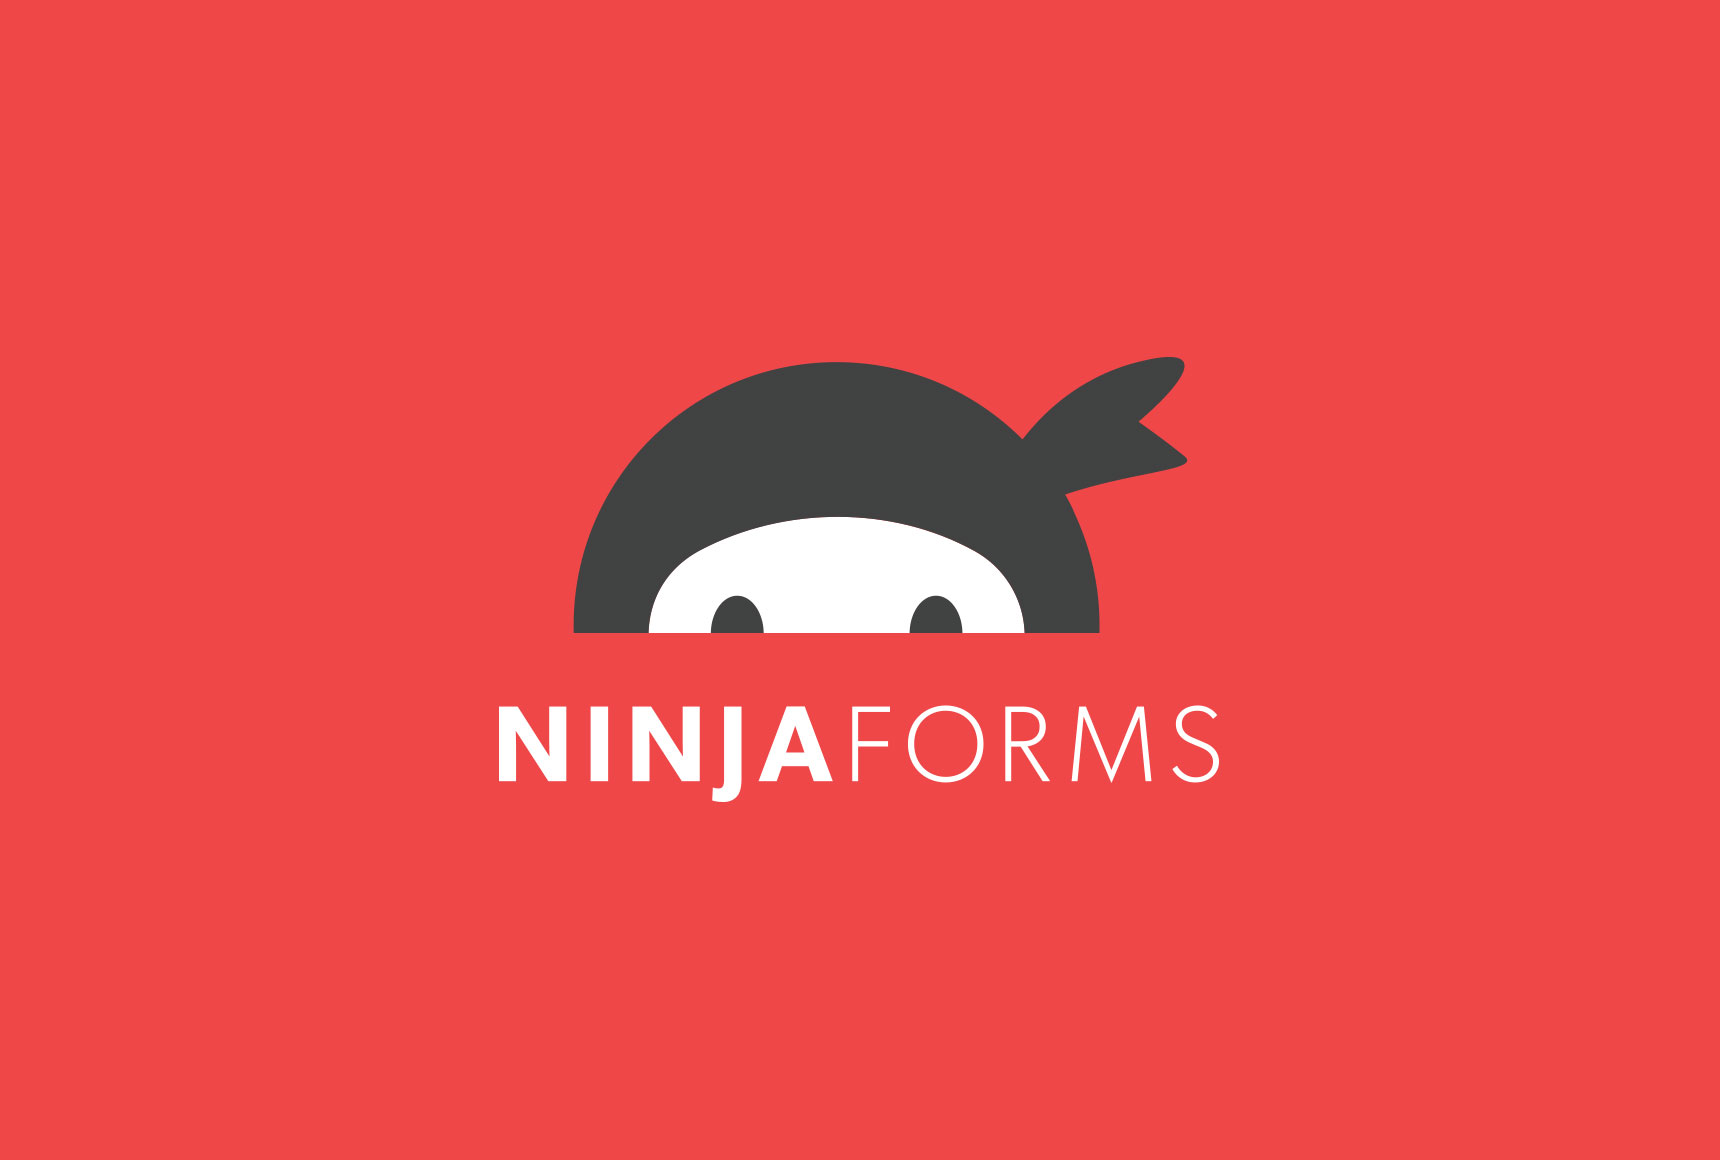 Ninja Forms masthead image